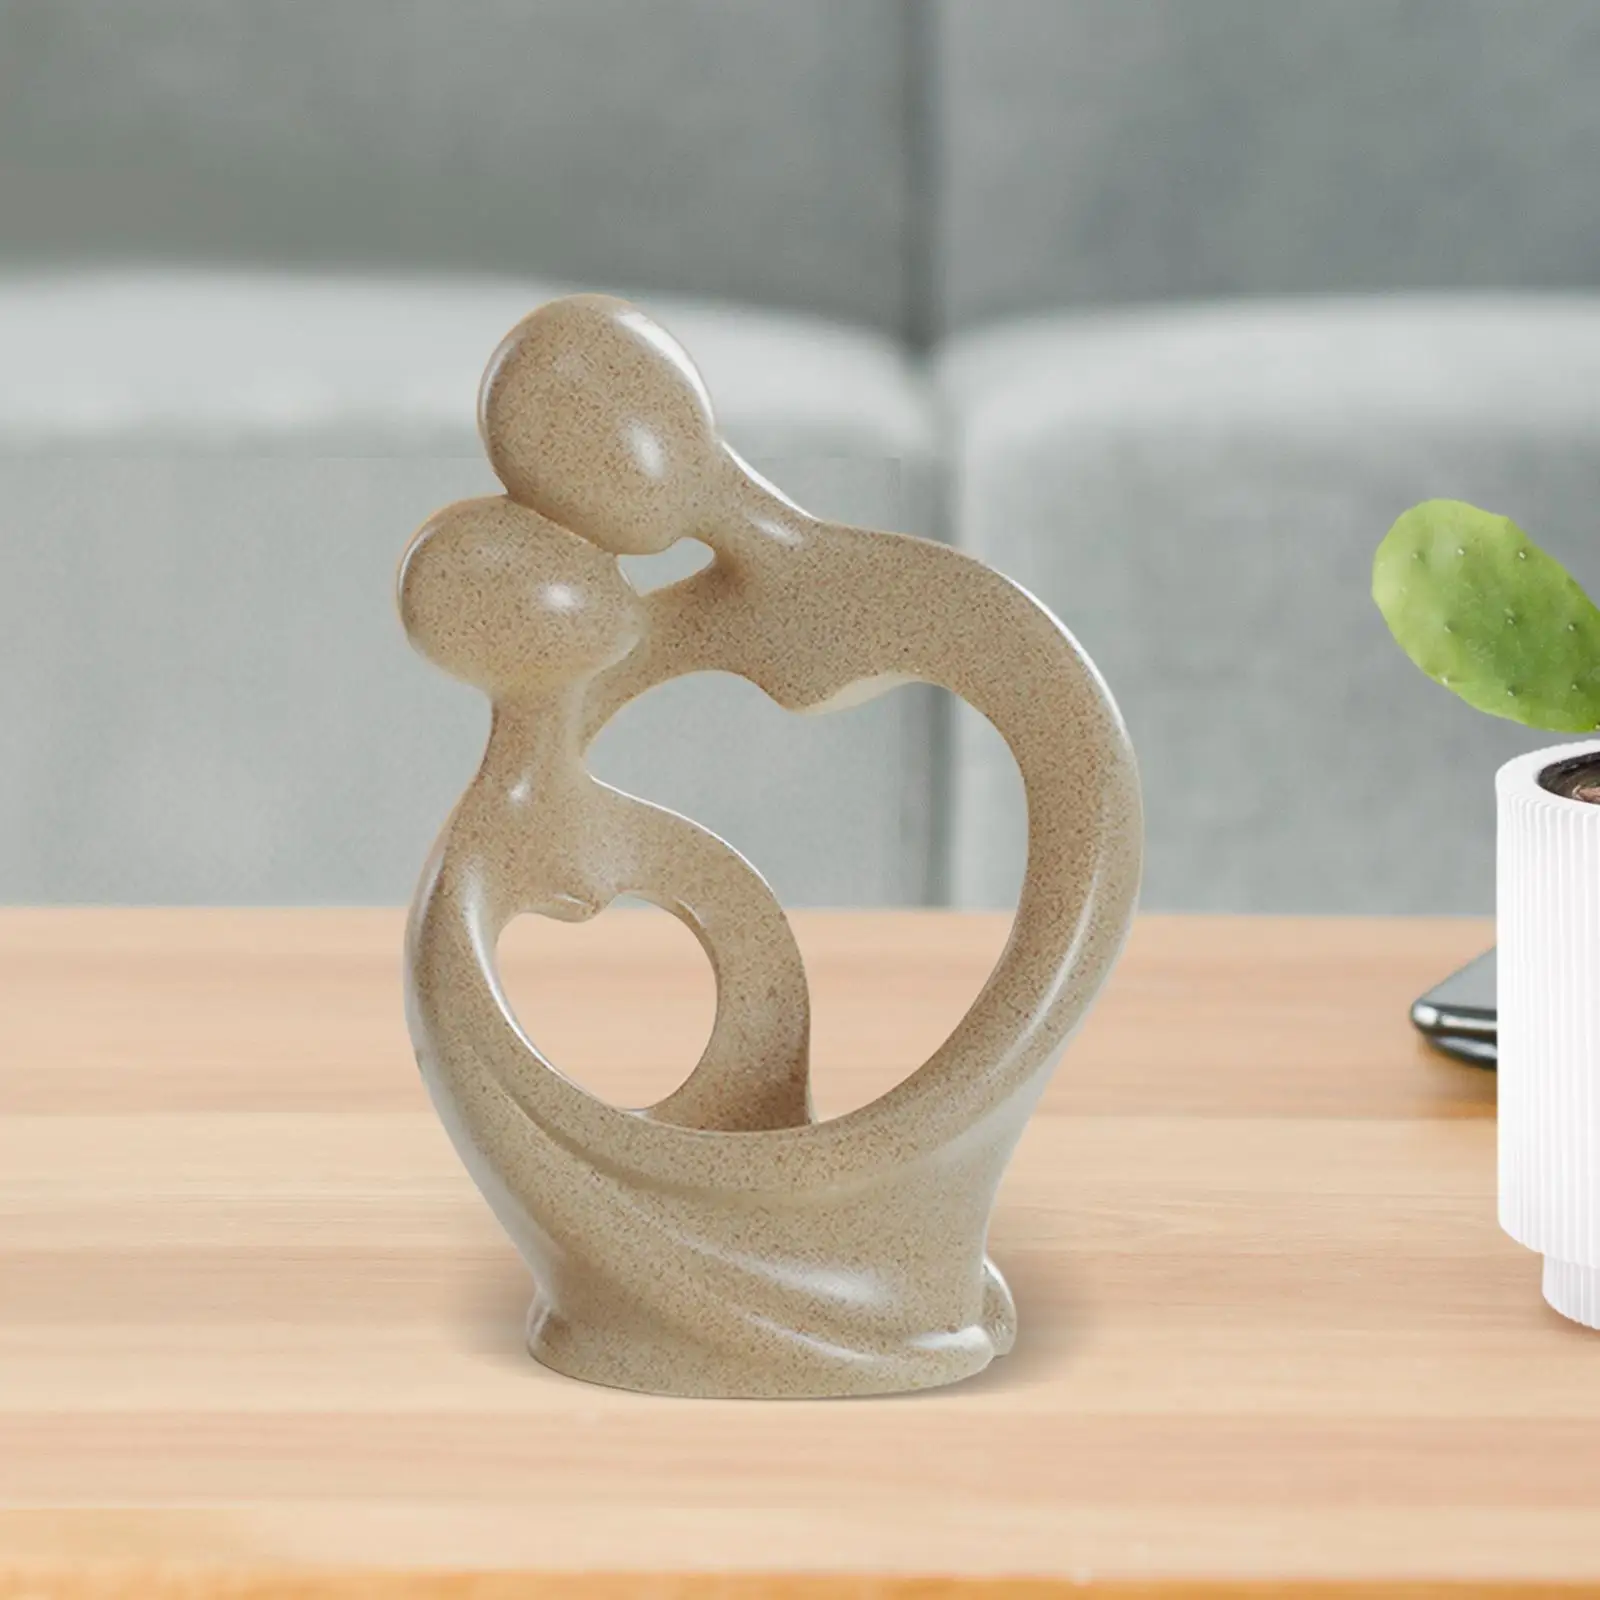 Couple Sculpture Handcraft Abstract Art Figurine for Living Room Shelf Decor